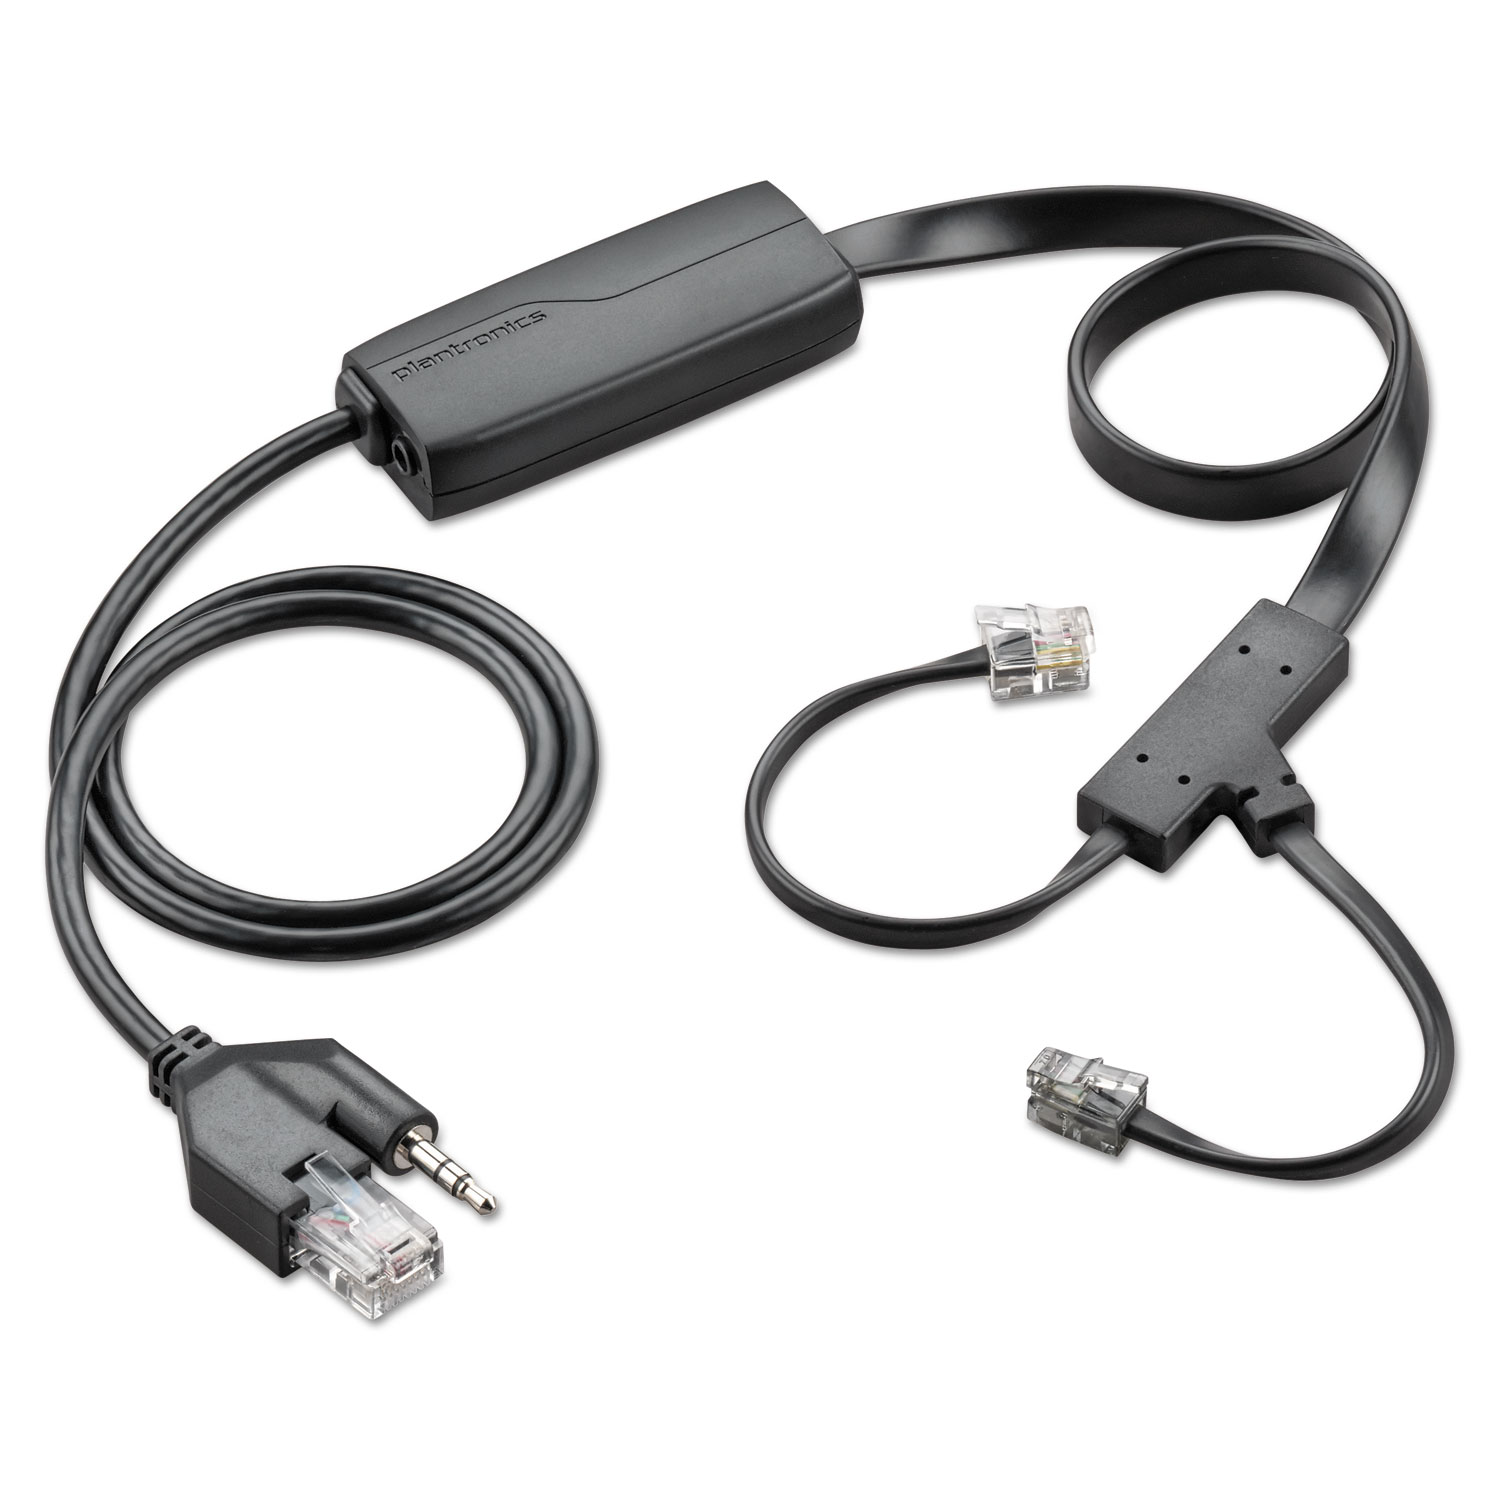  Plantronics 38350-13 APC-43 Electronic Hookswitch Cable, Black (PLNAPC43) 